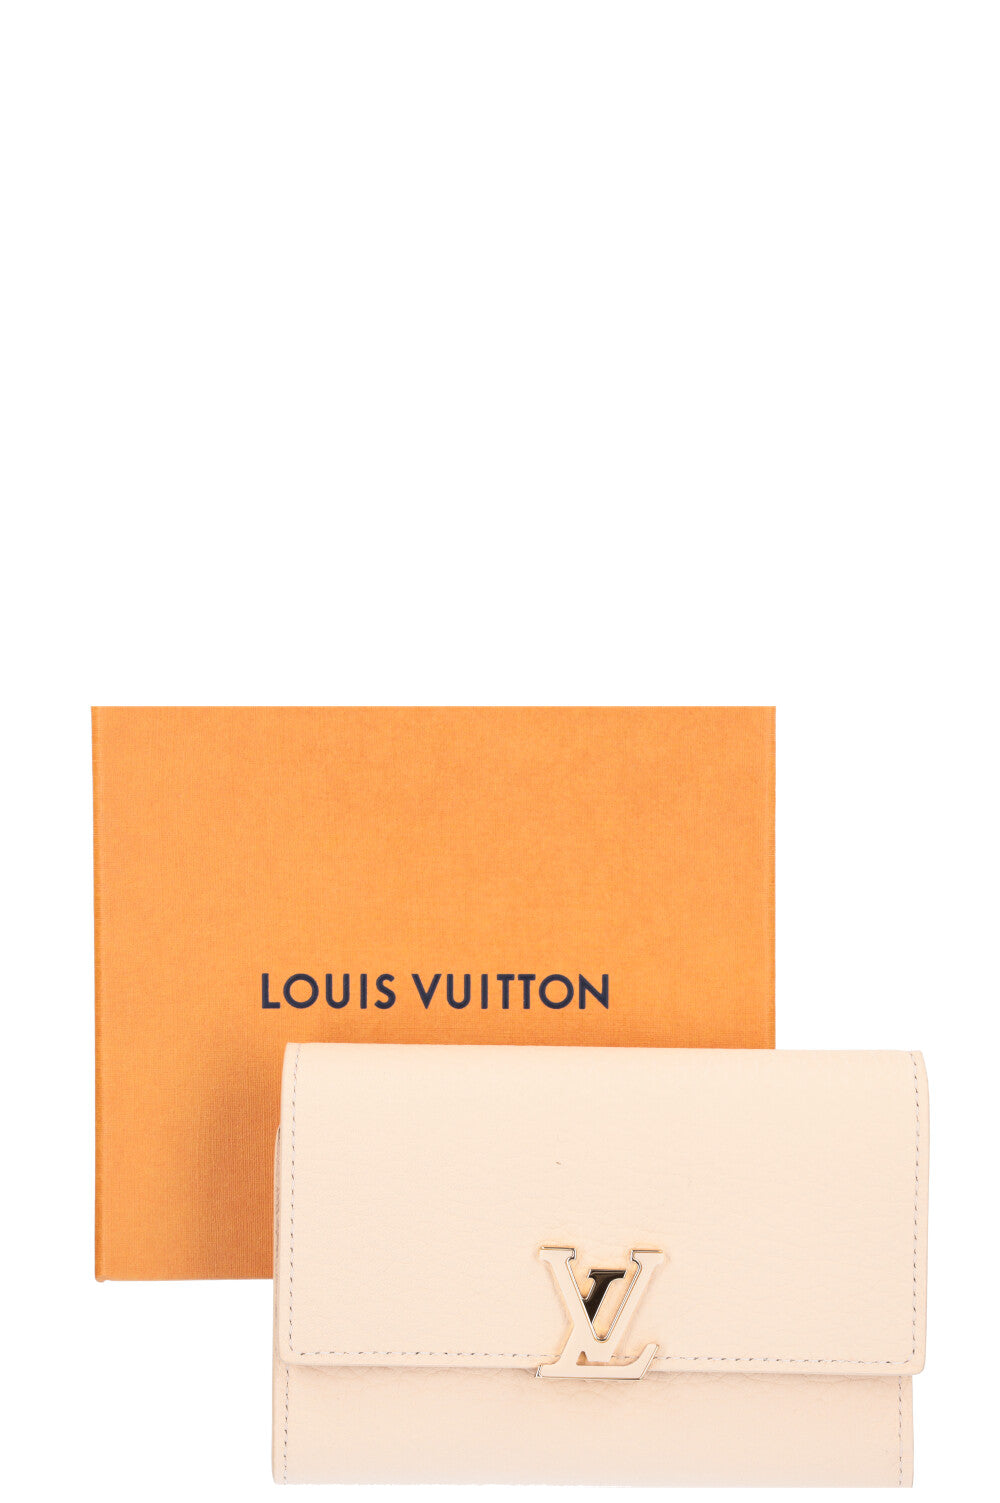 Louis Vuitton Portefeuille Tresor Monogram Canvas Compact Wallet Brown   eBay